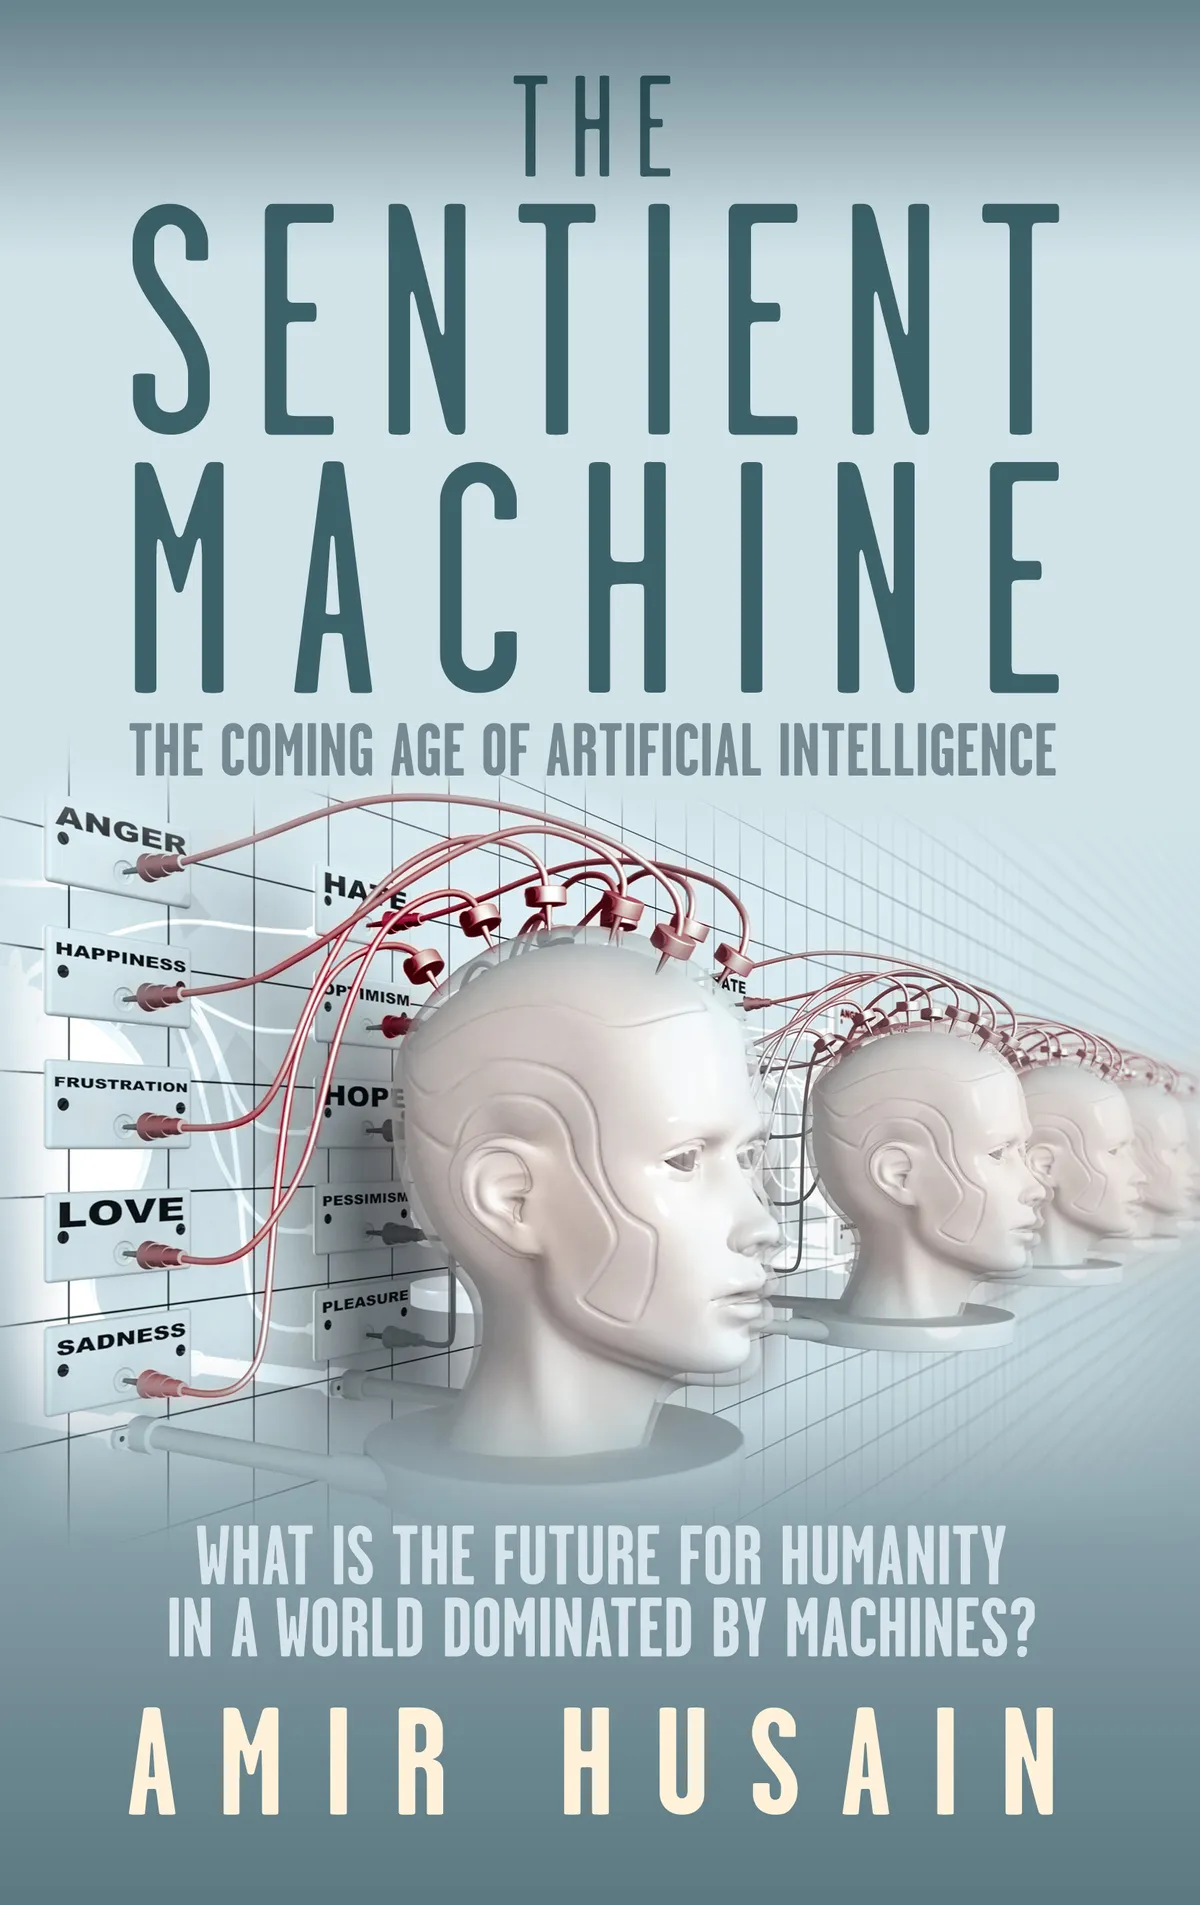 The Sentient Machine by Amir Husain is available now (£20, Souvenir Press)